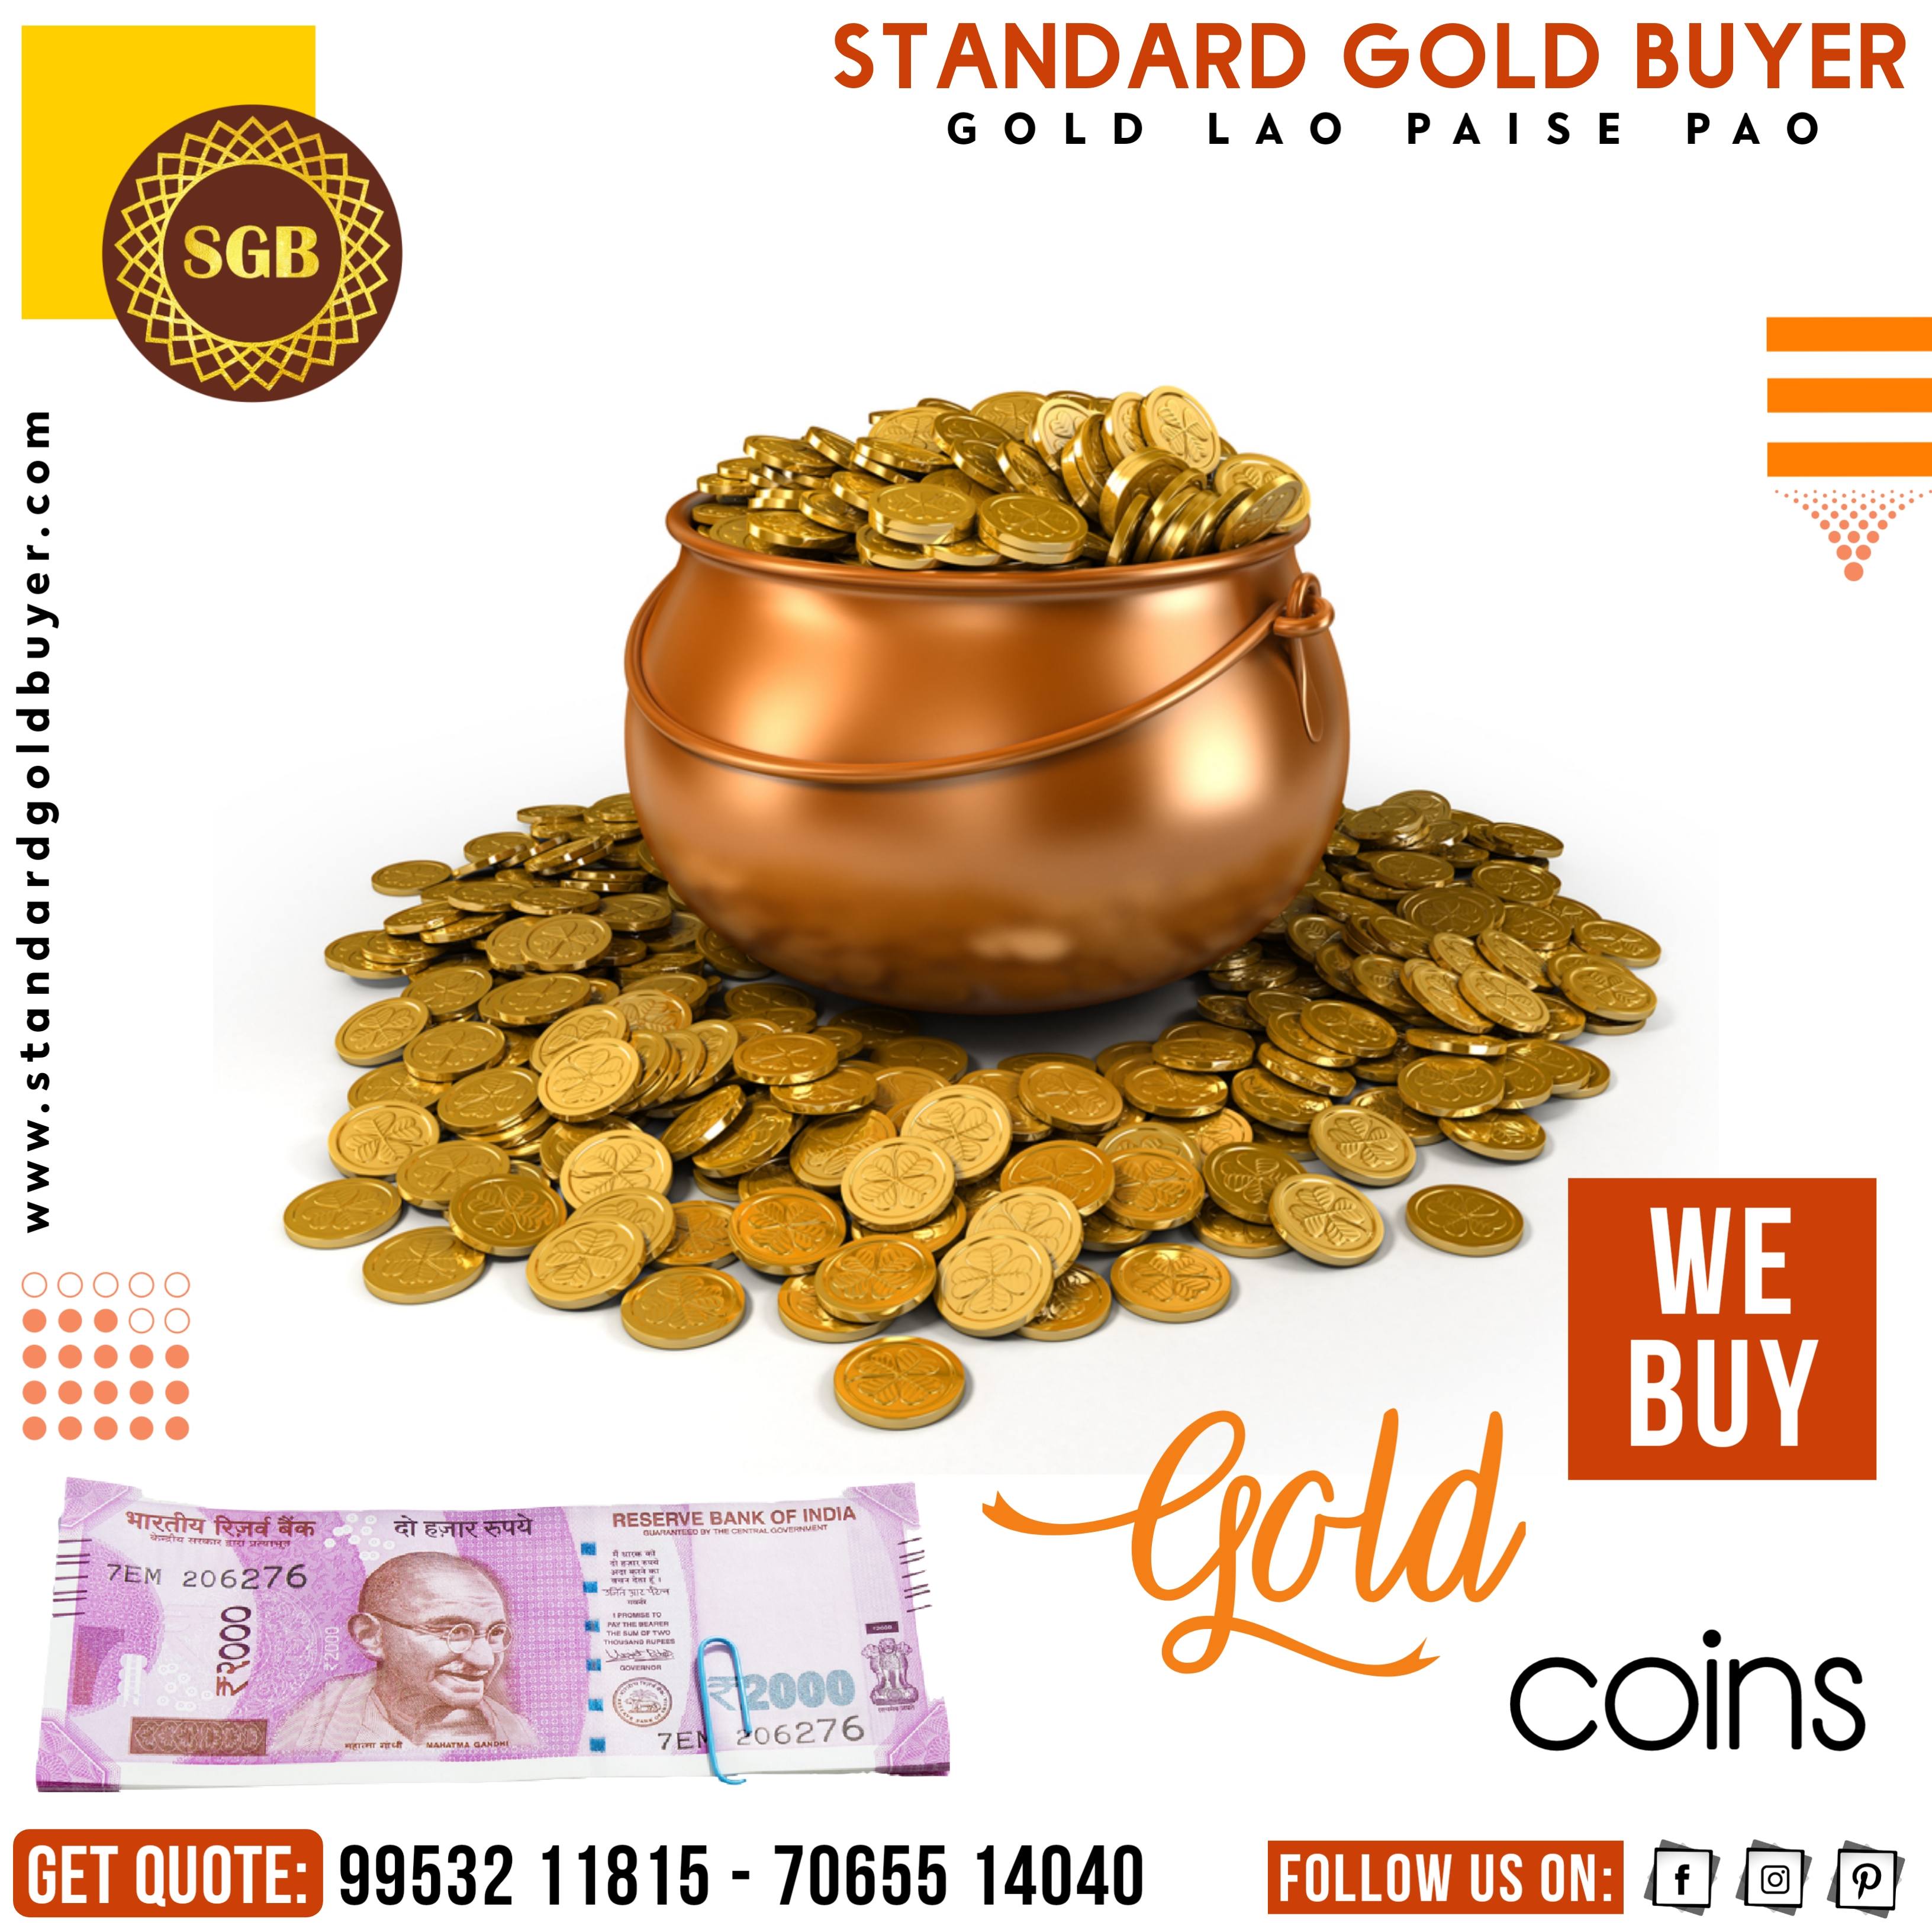 cash for silver & gold coins in delhi 